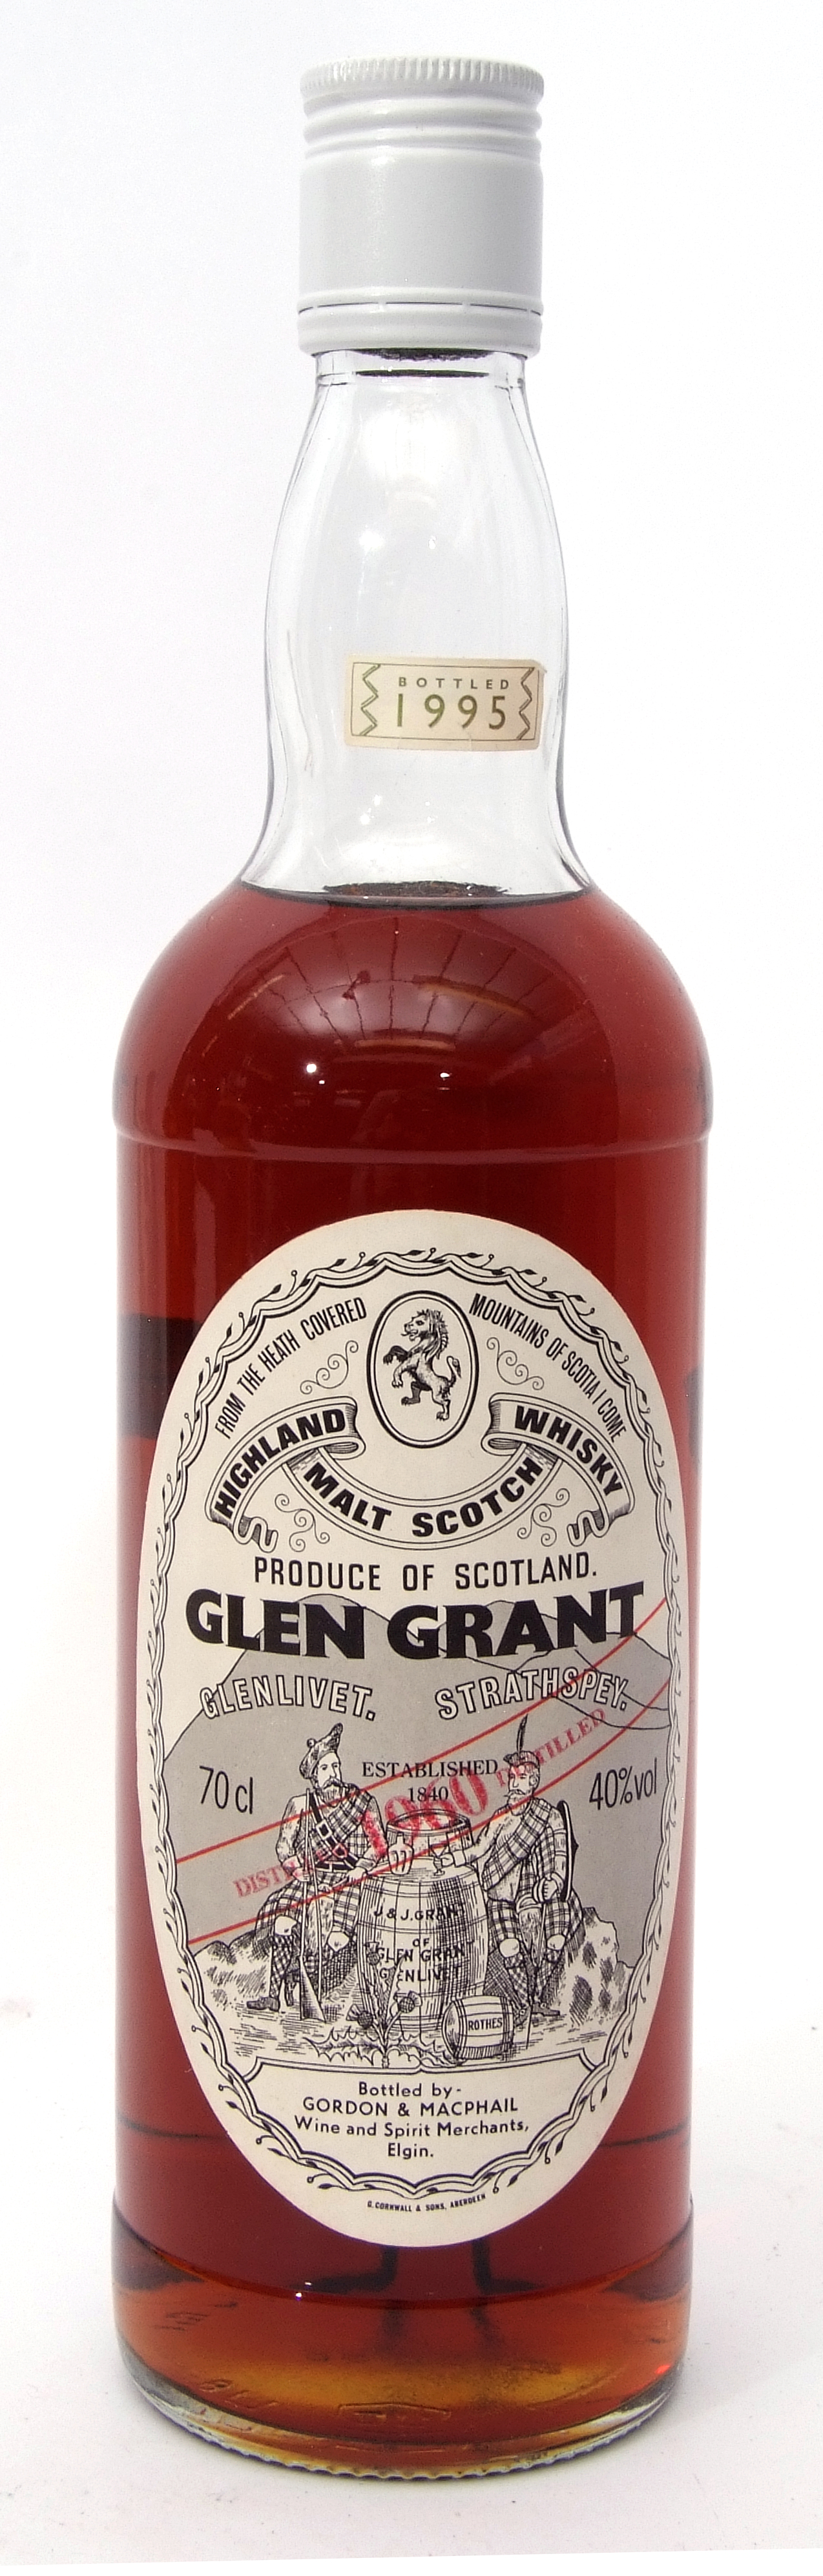 Glen Grant Highland Malt Scotch Whisky, bottled 1995 (Gordon & McPhail), 40% vol, 70cl